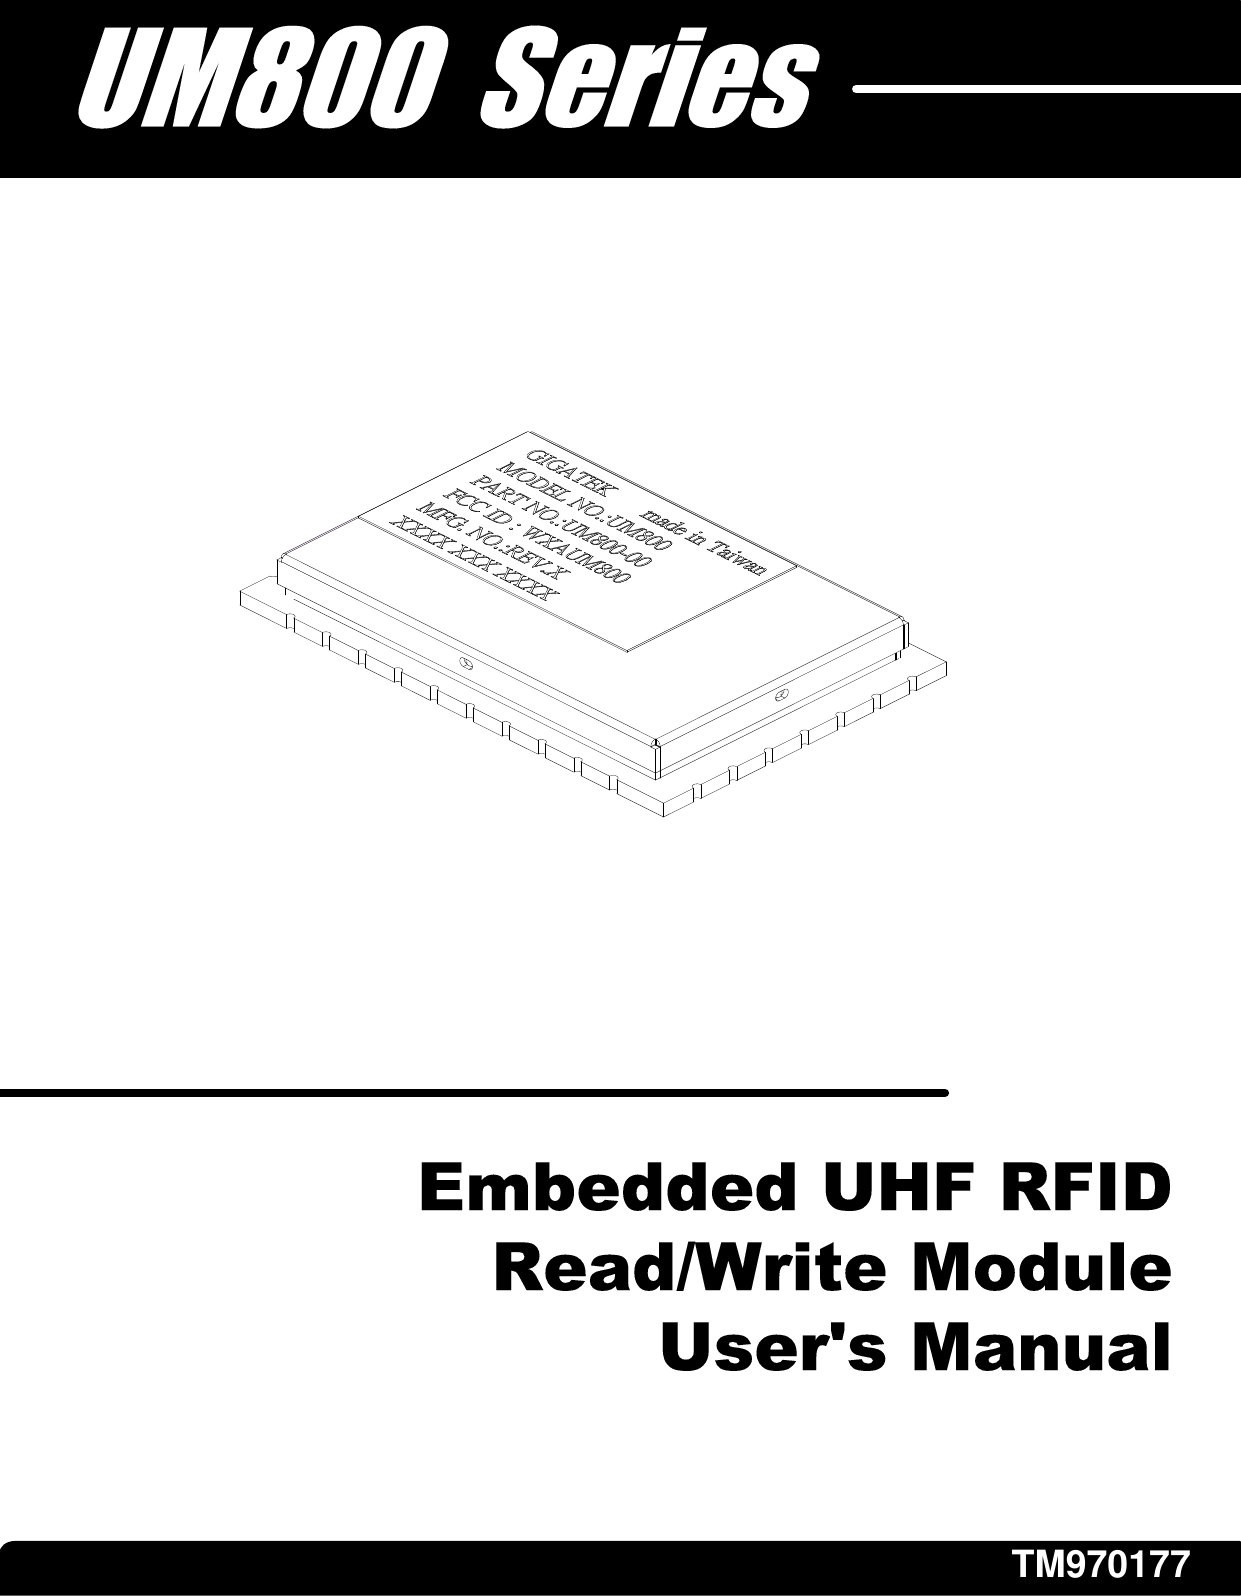 Embedded UHF RFID Read/Write Module          User&apos;s ManualUM800  SeriesTM970177